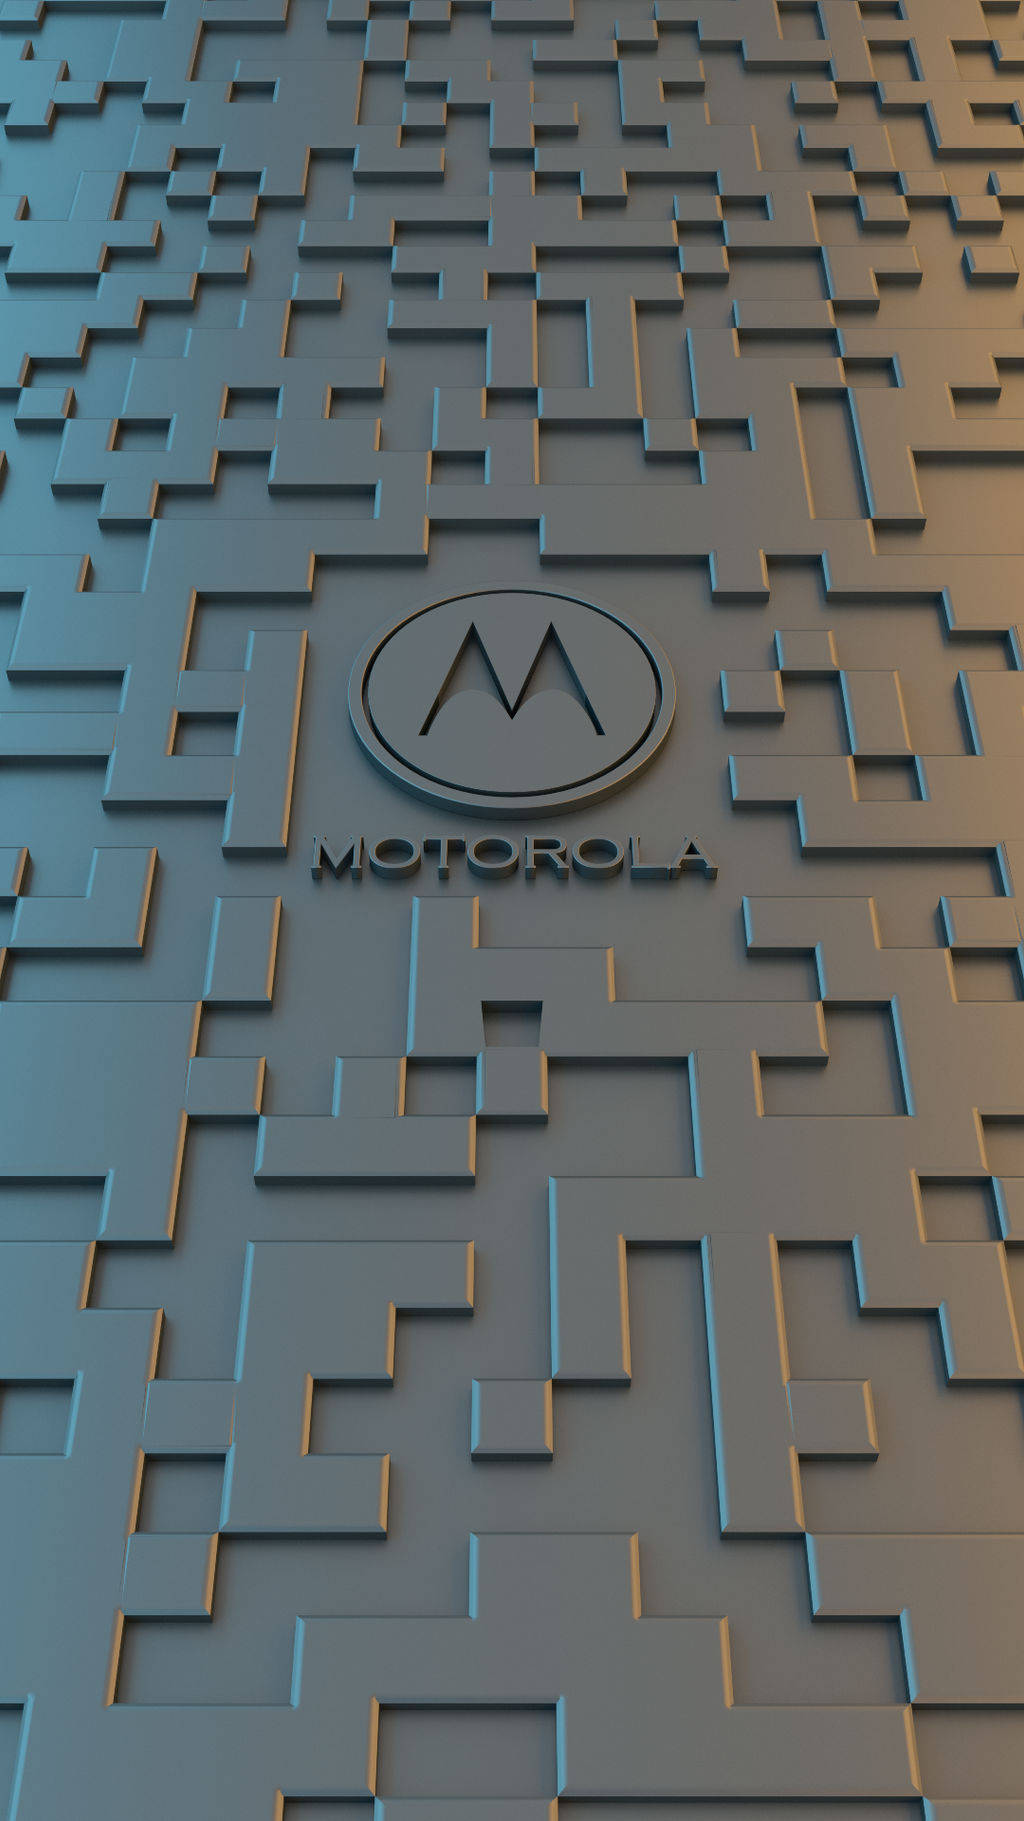 Motorola Maze Wall